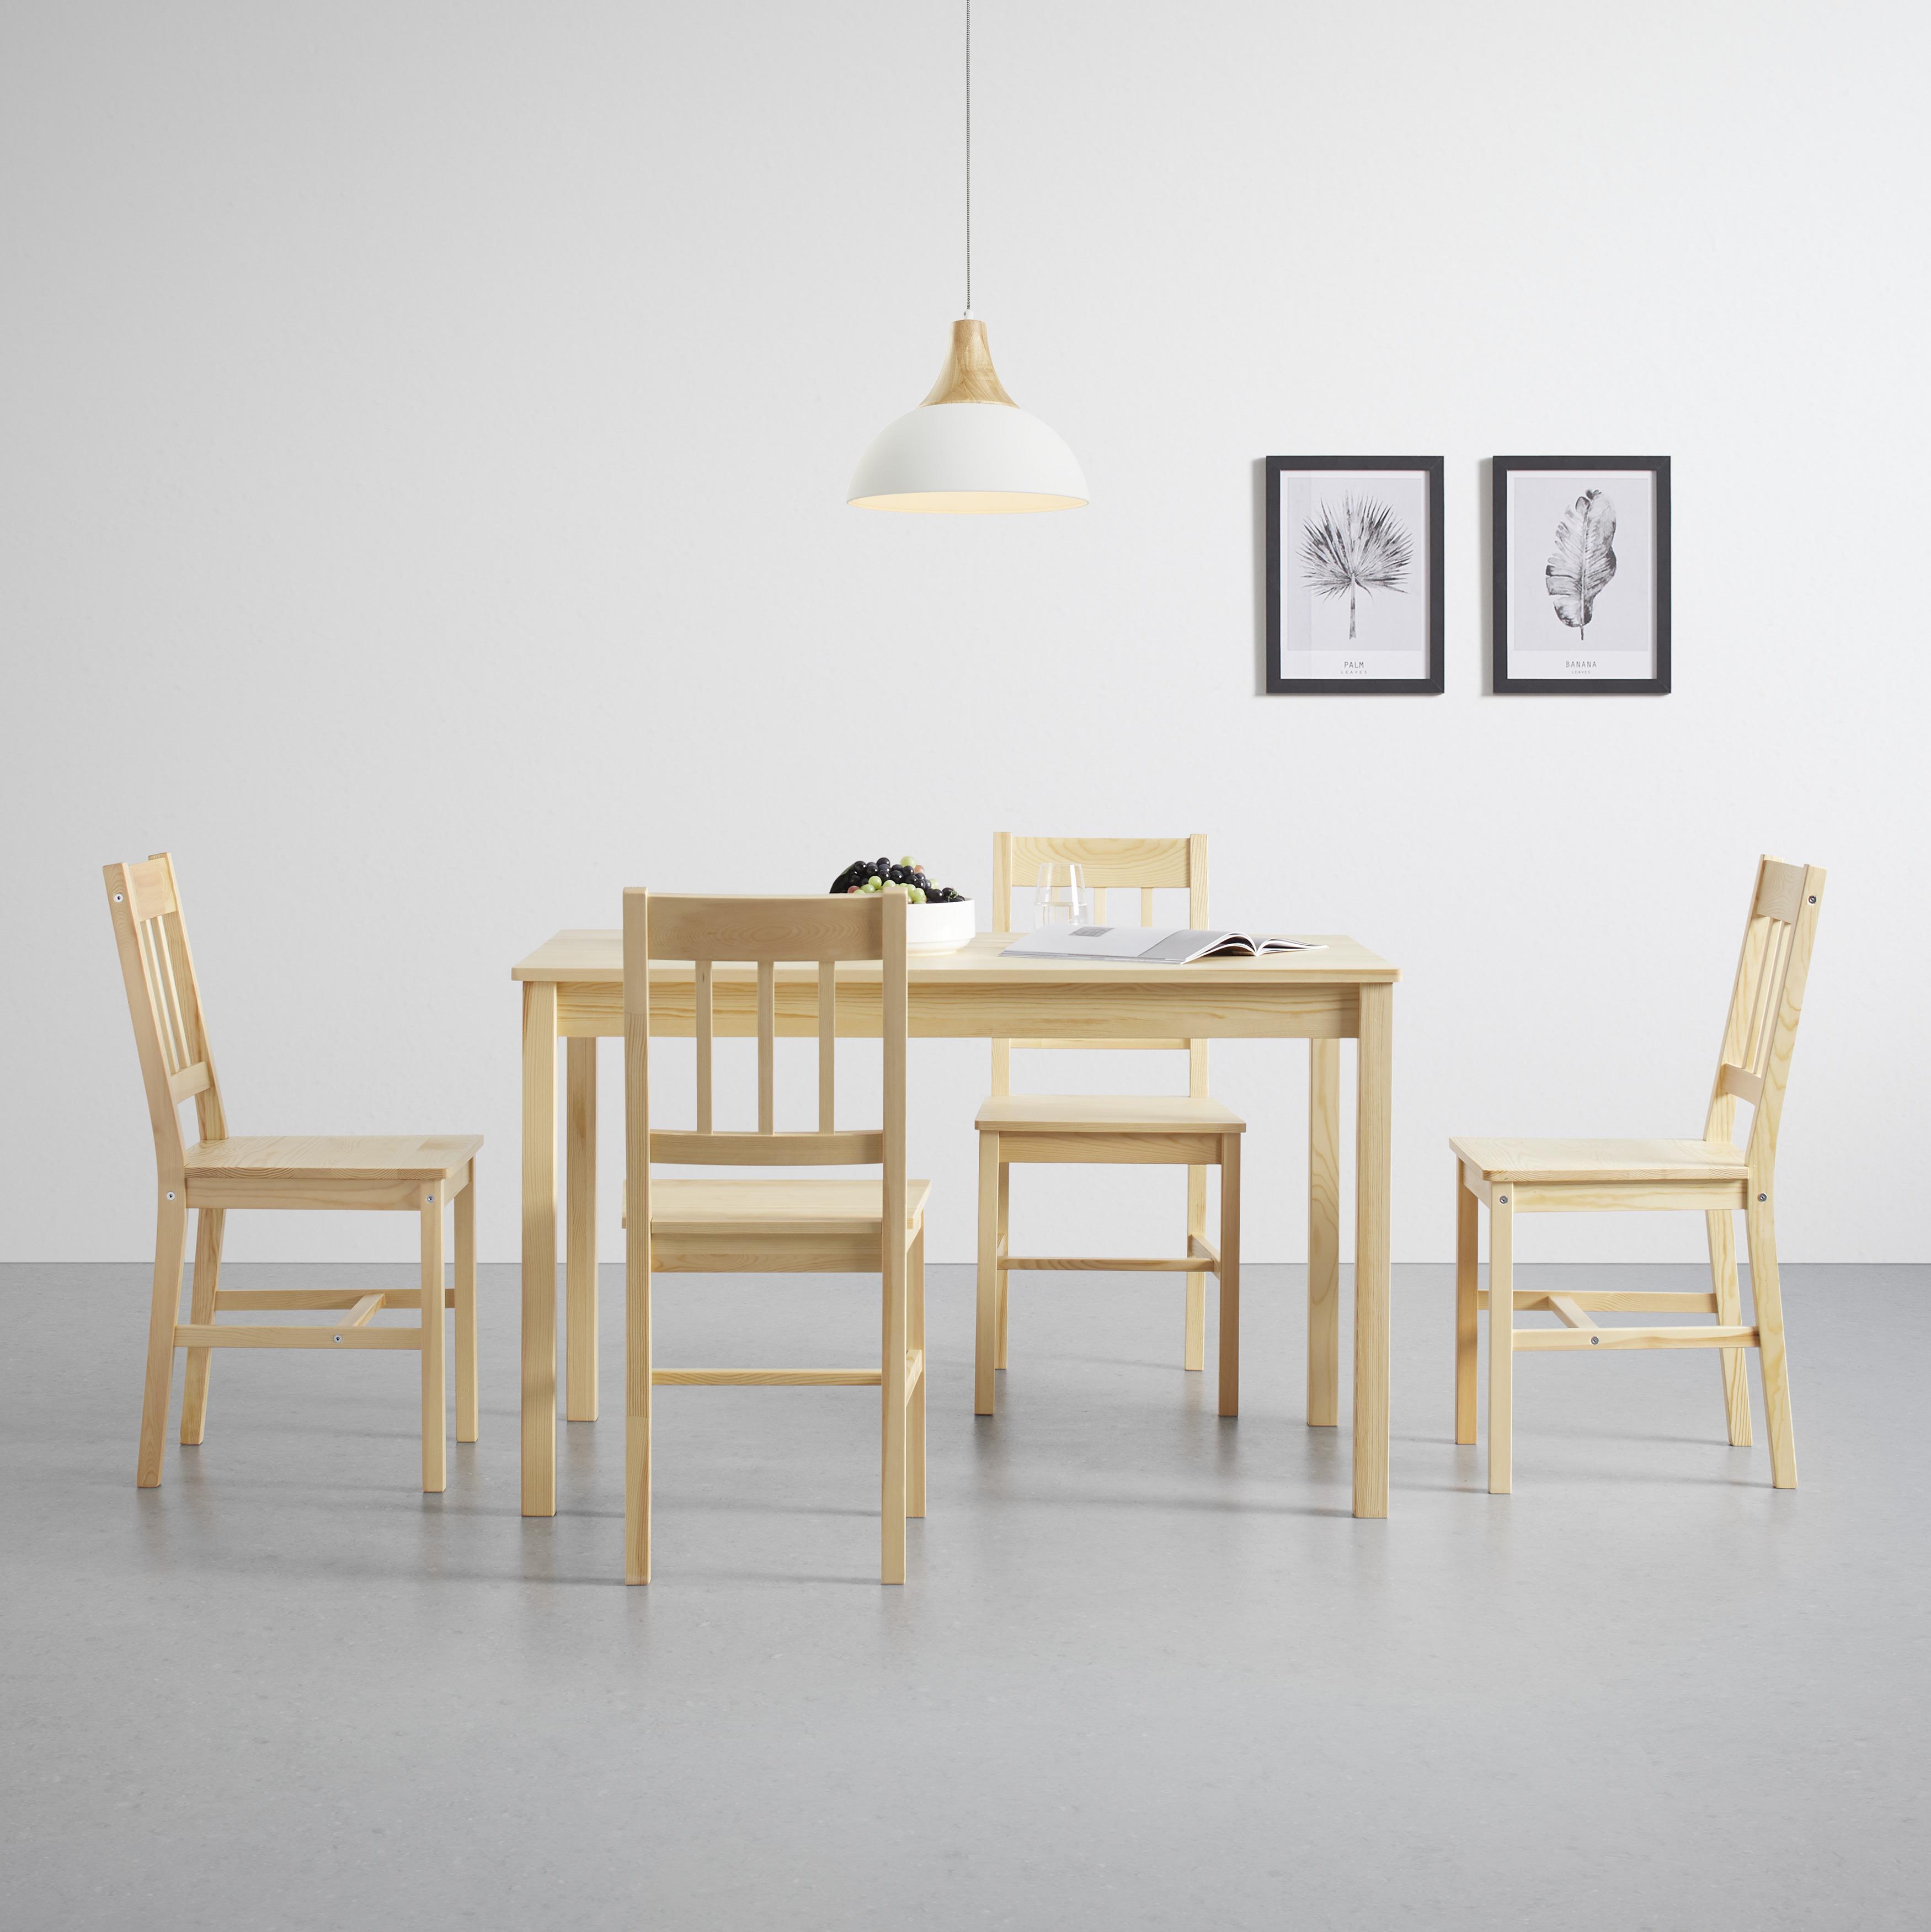 Sitzgruppe Massivholz "Amira", aus Kiefer - Naturfarben, MODERN, Holz (118/43/75/40.5/73/86cm) - Bessagi Home